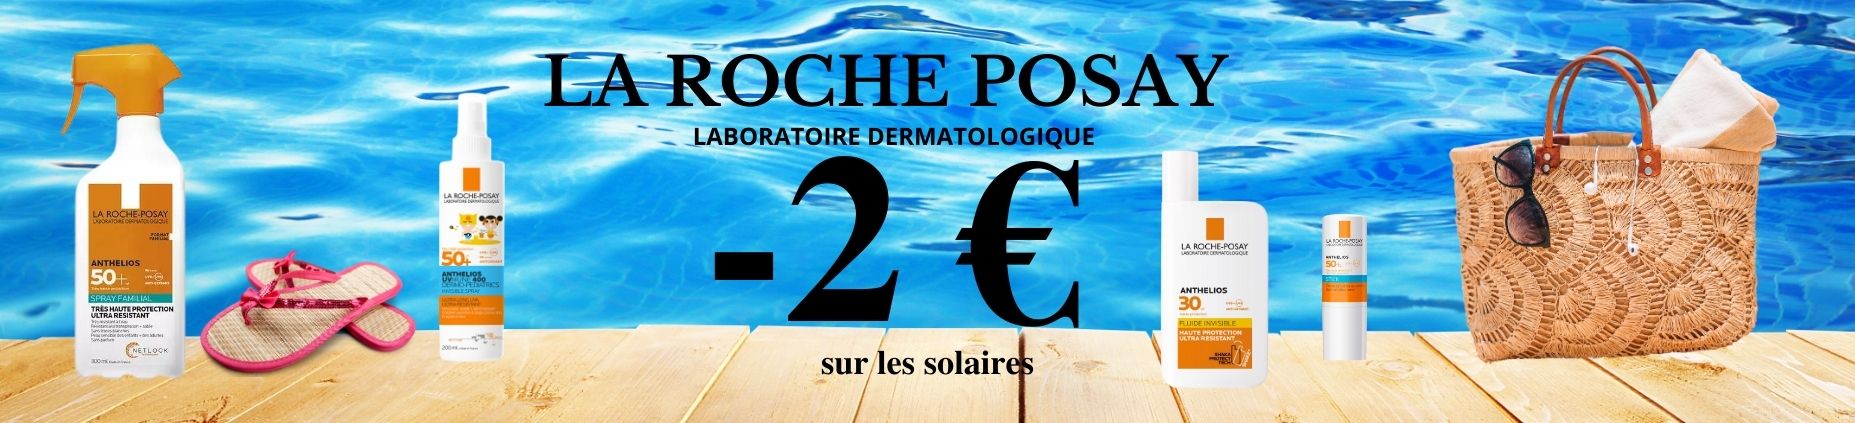 LA ROCHE POSAY promo -2 euros